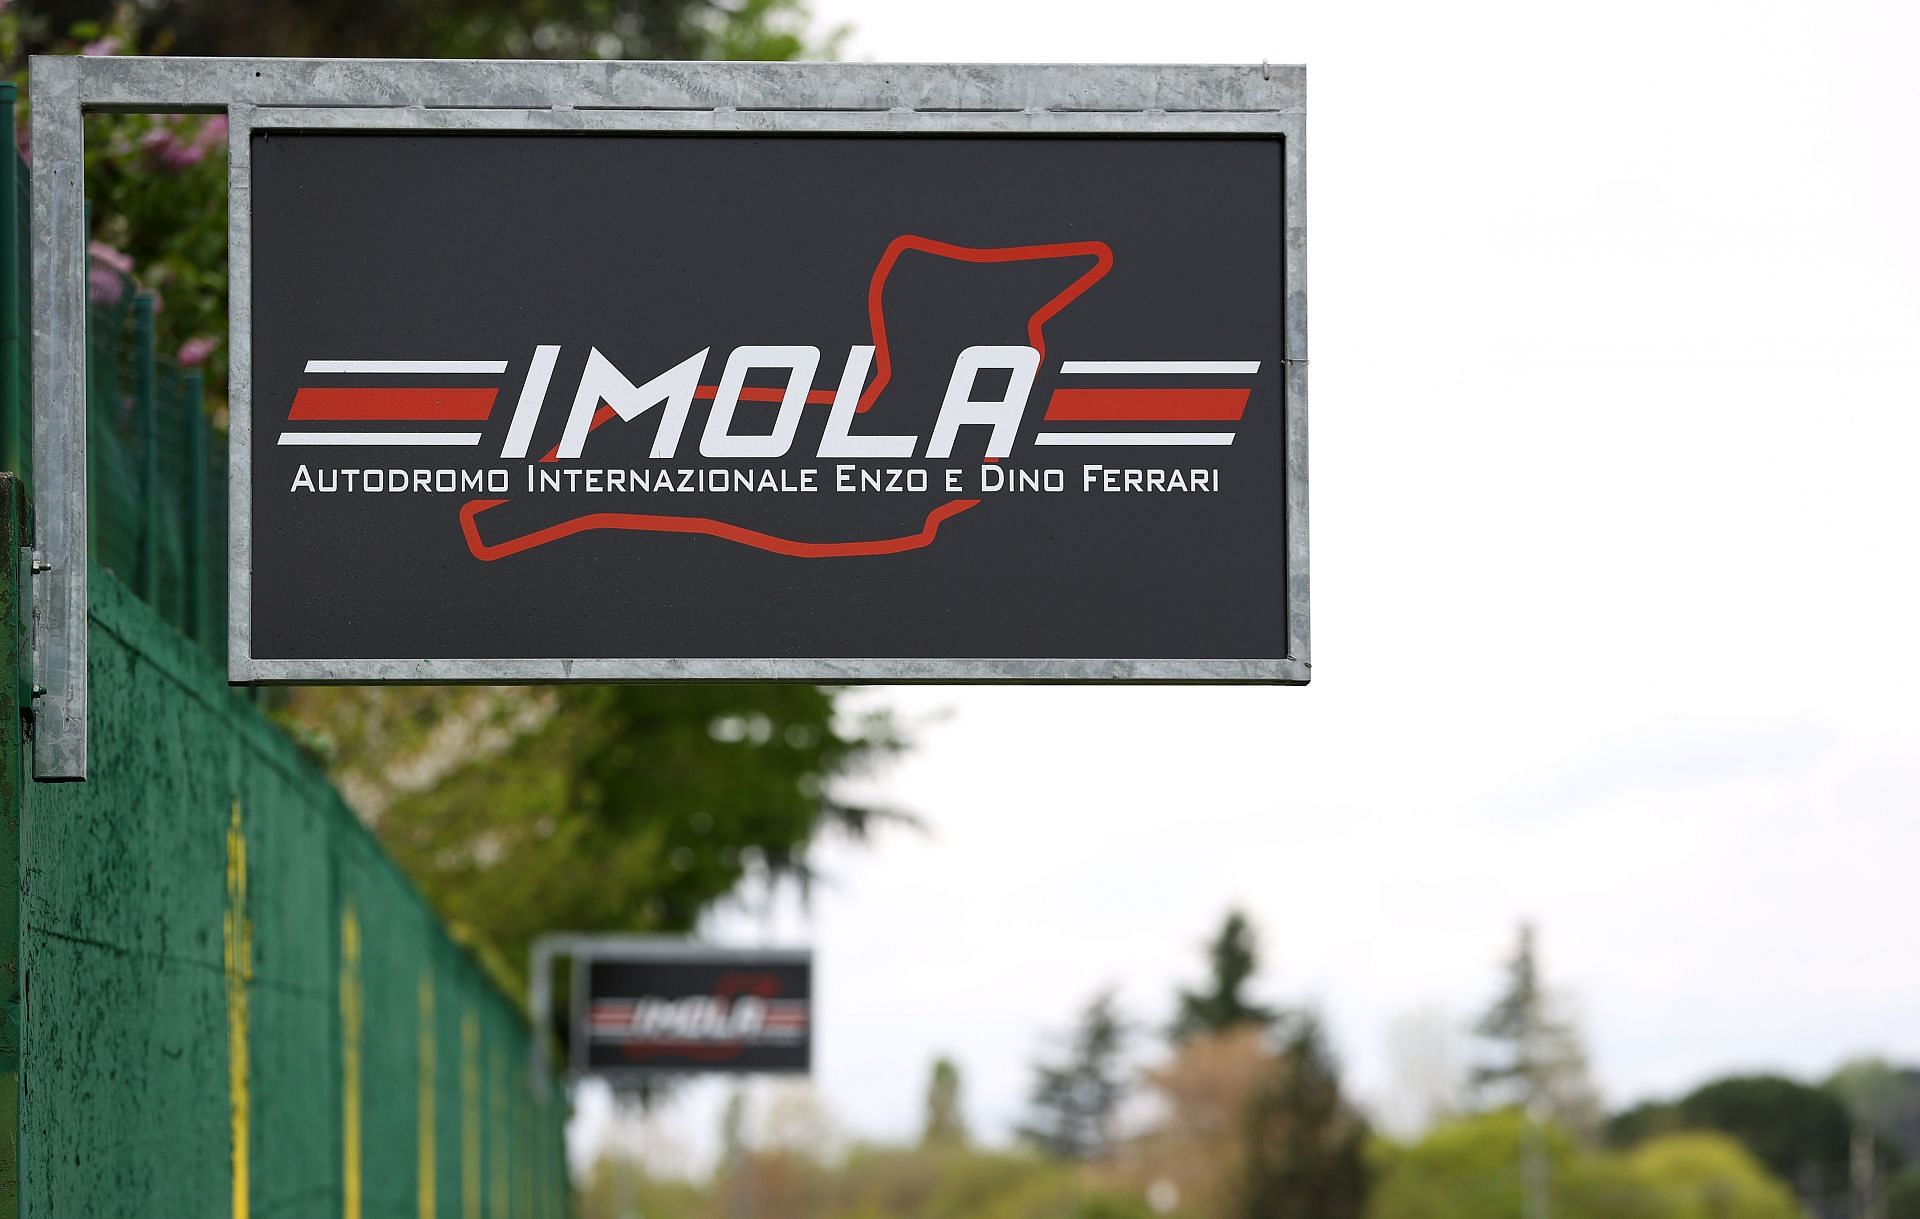 F1 Grand Prix of Emilia Romagna - Previews